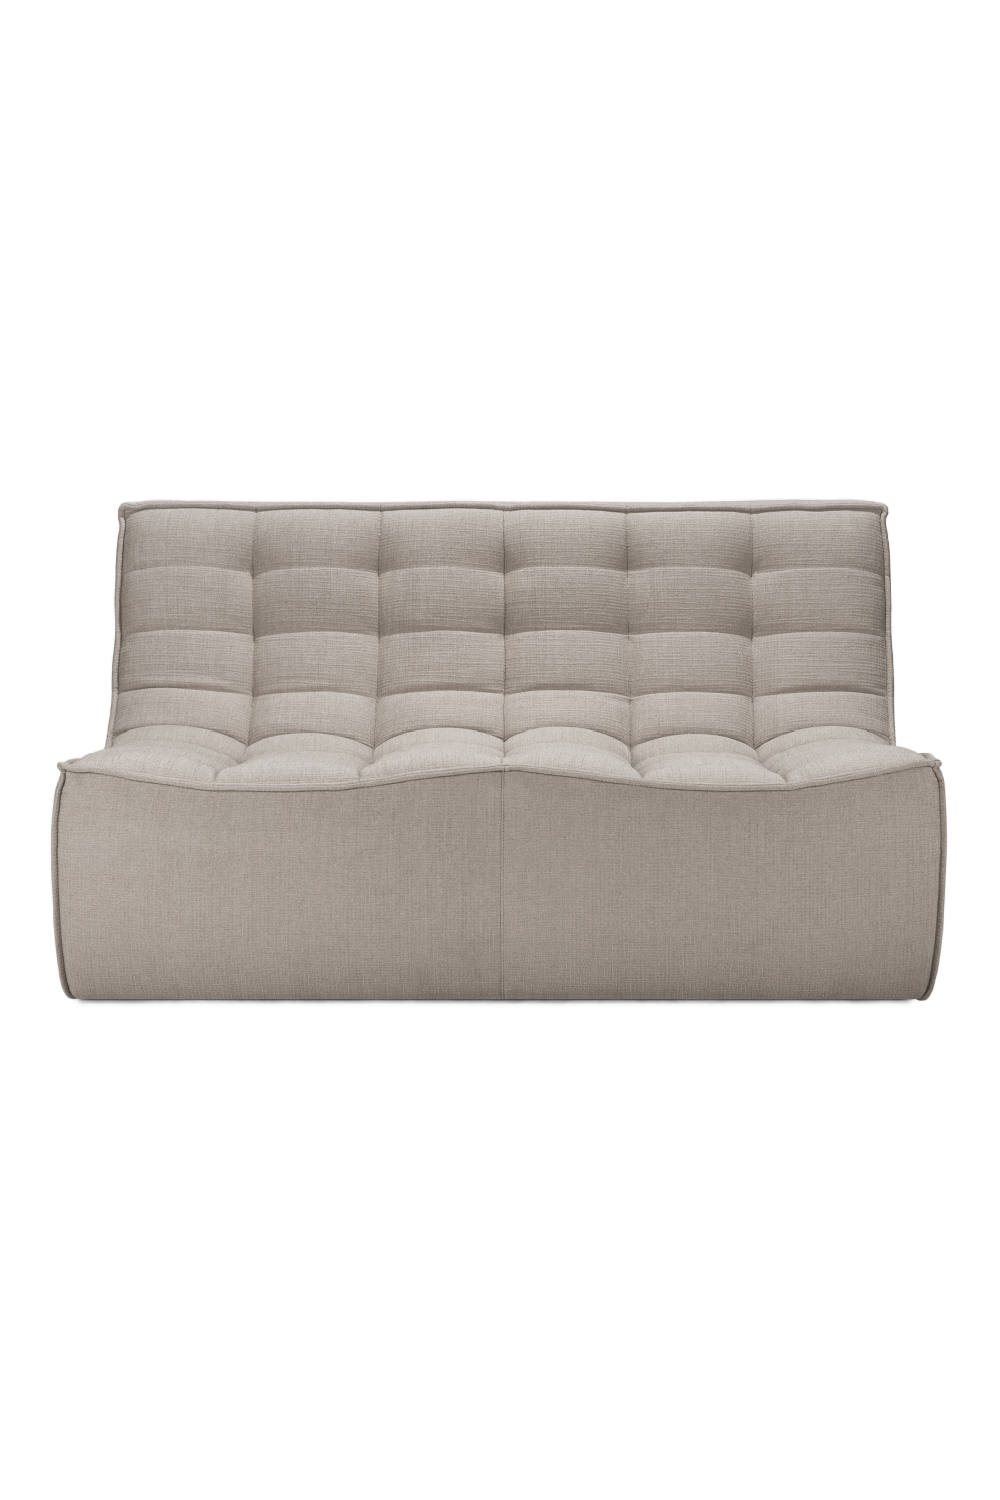 Gray Modular Sofa | Ethnicraft N701 | Oroa.com